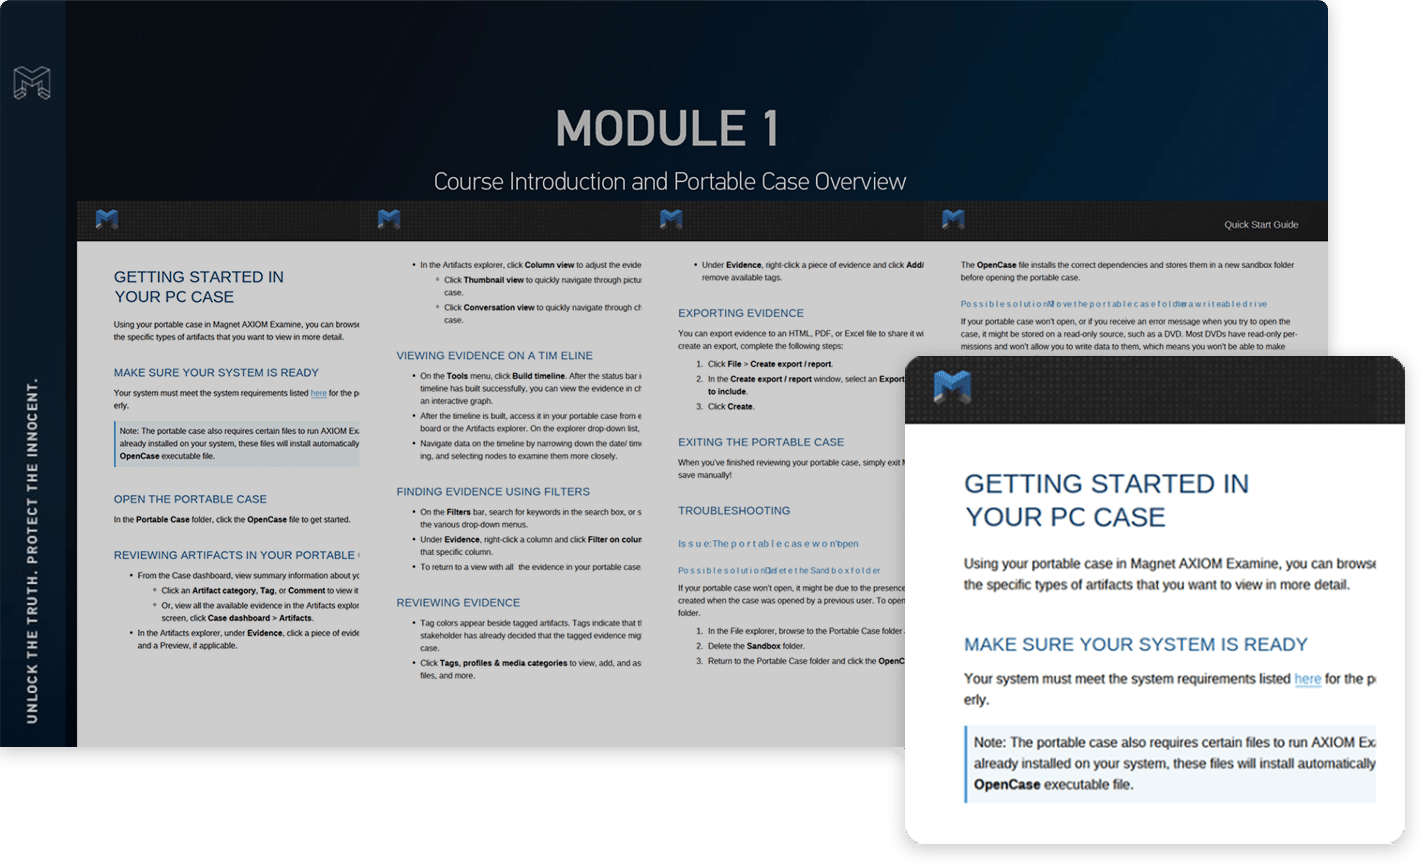 Module 1 training screen